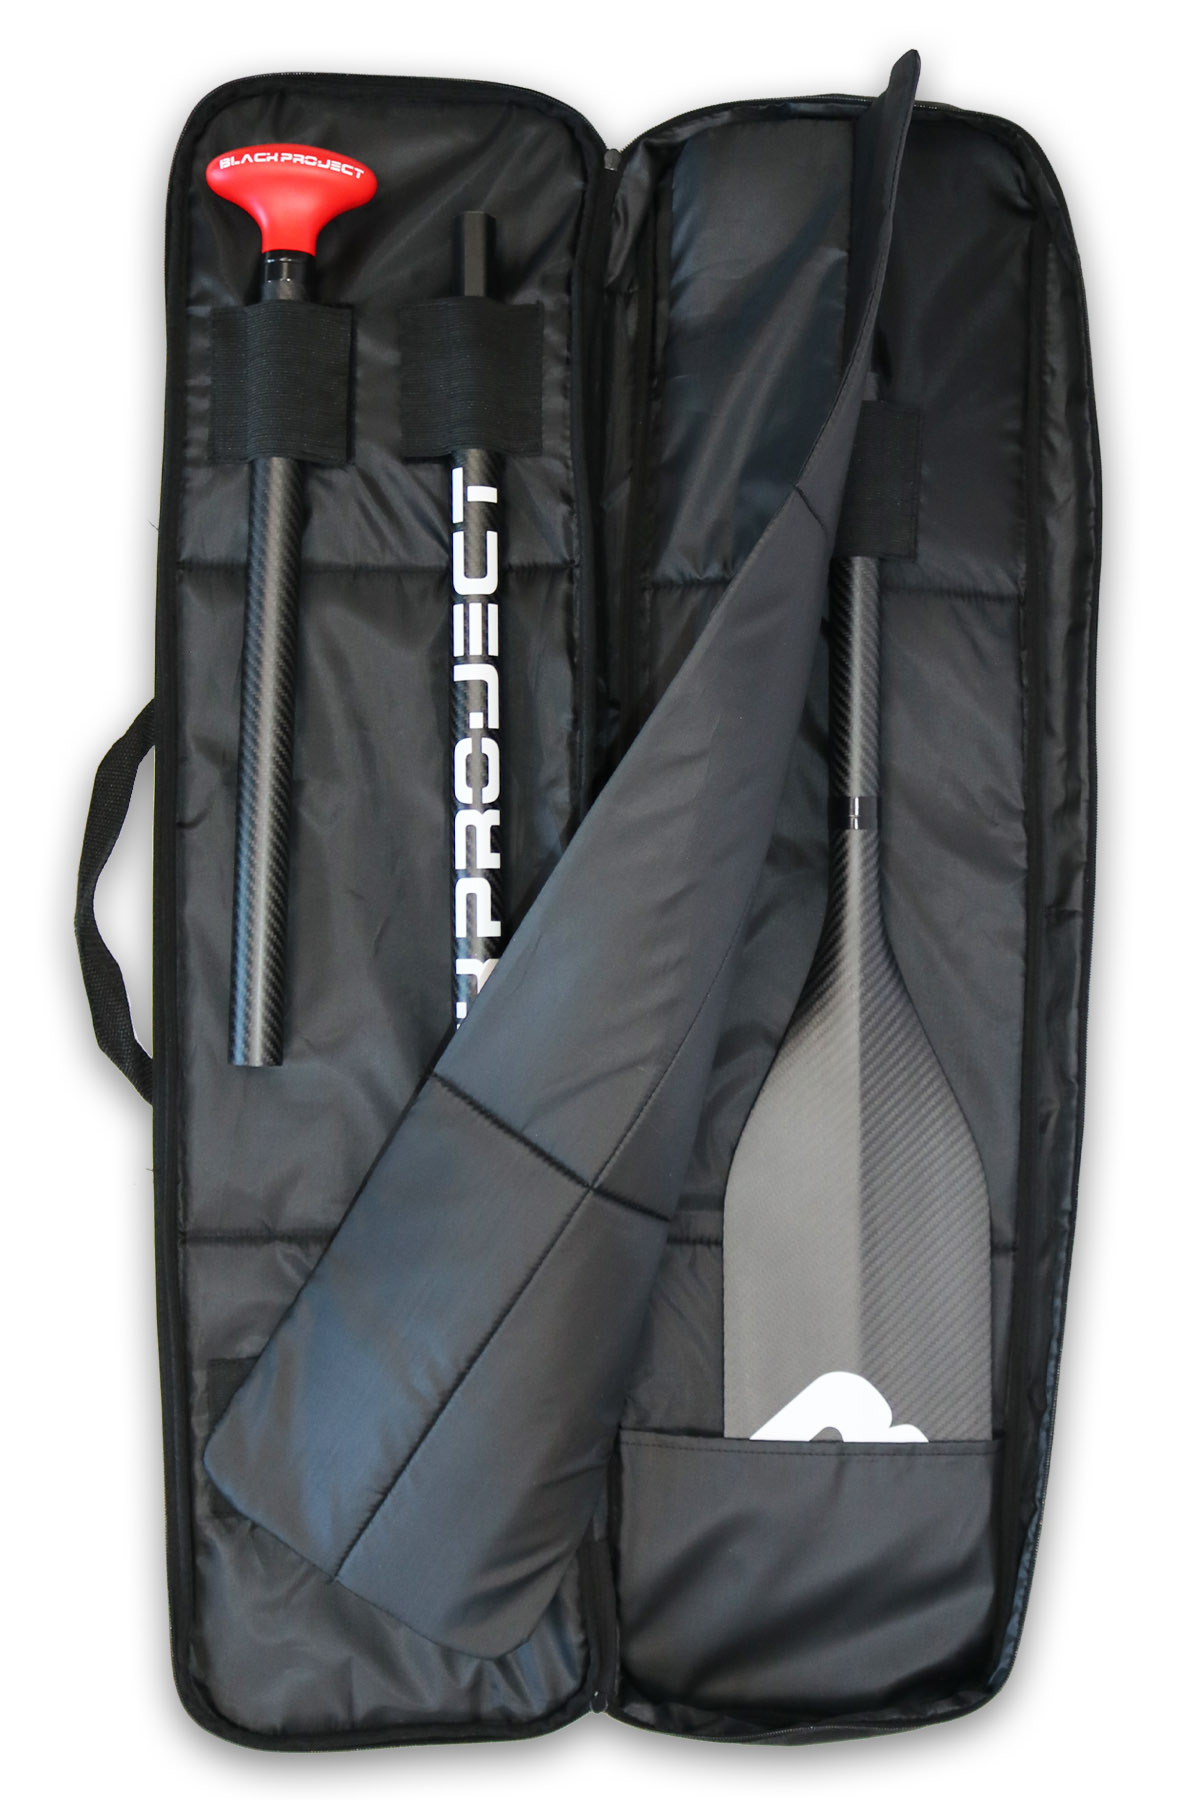 sup paddle, travel paddle, 3-piece travel paddle, hydro race paddle, lightest travel paddle, carbon, padded travel case